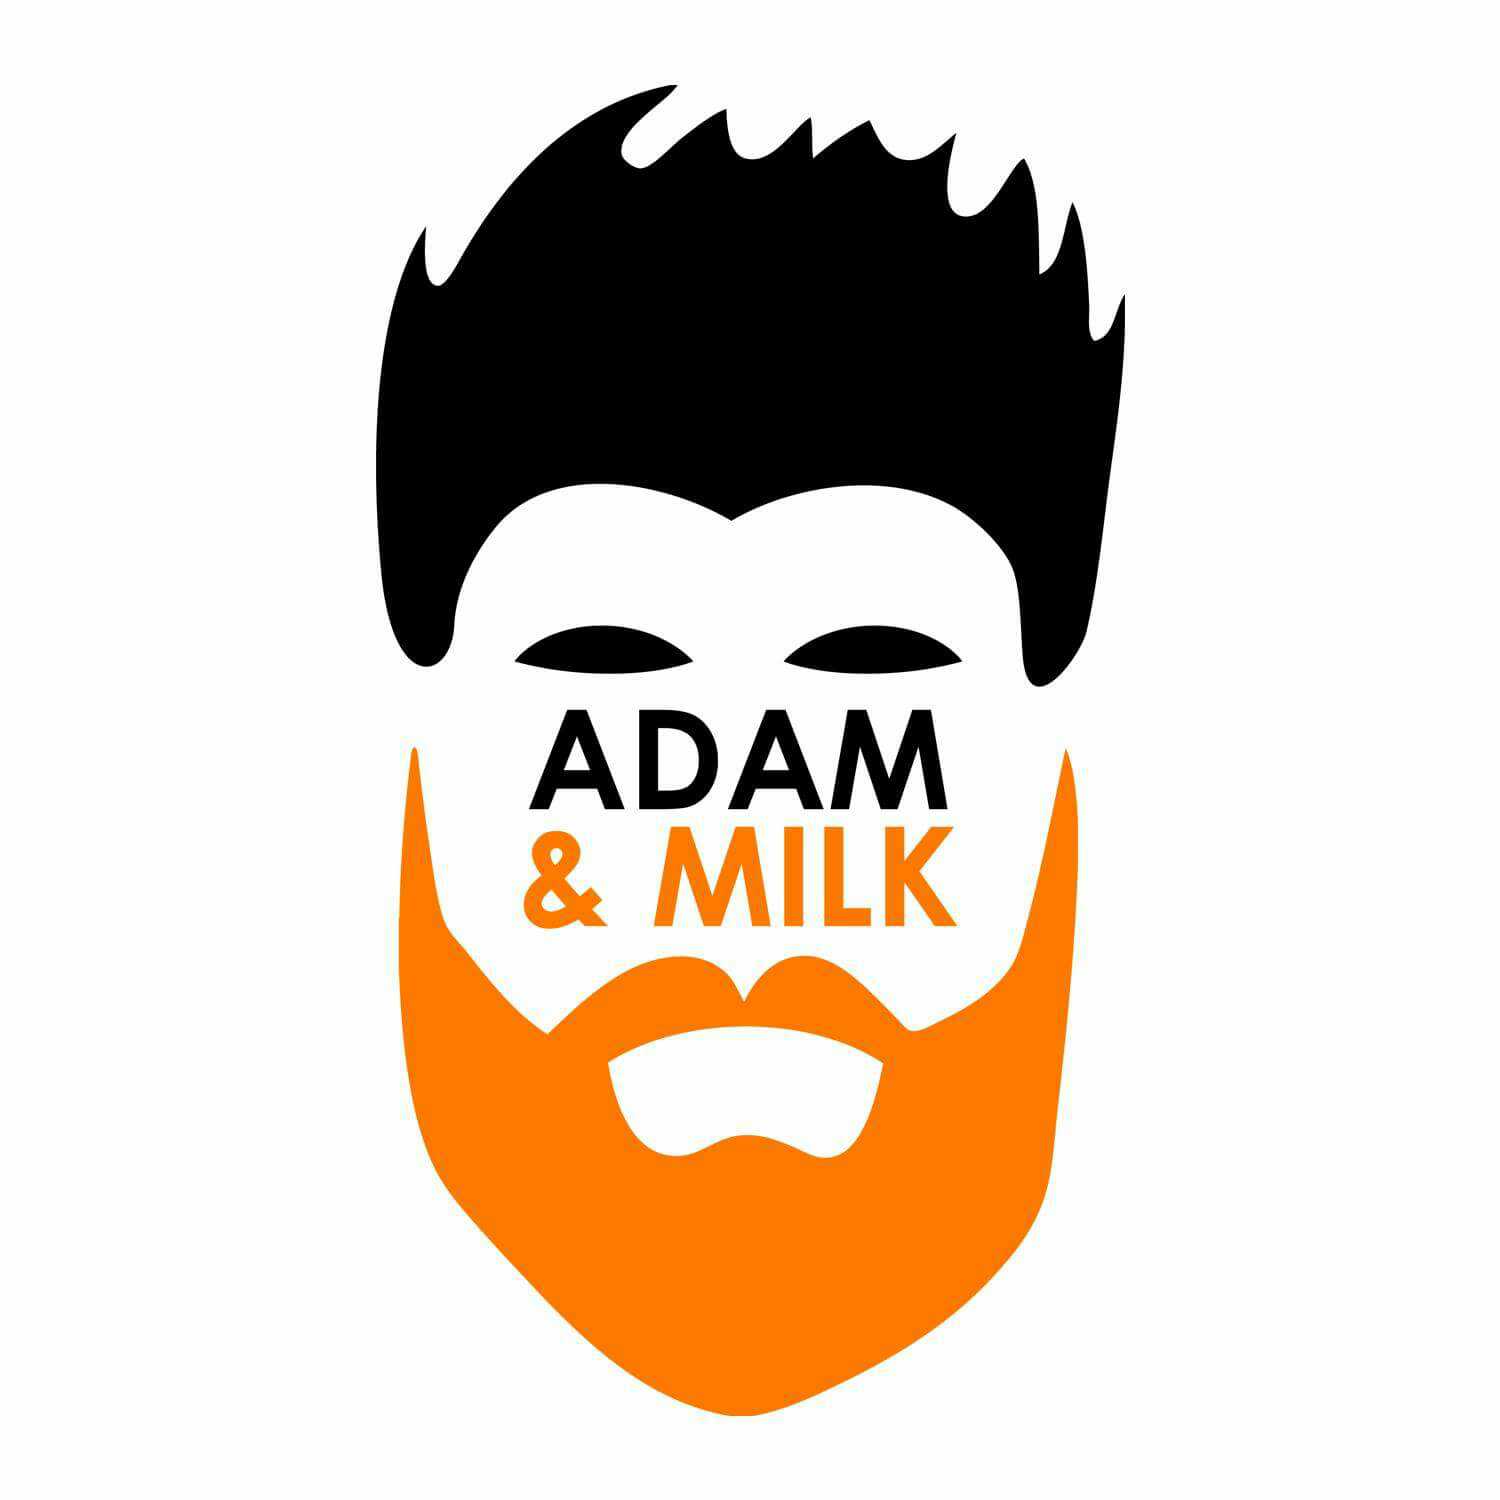 021 - Cordory - Unpleasant with Adam and Milk